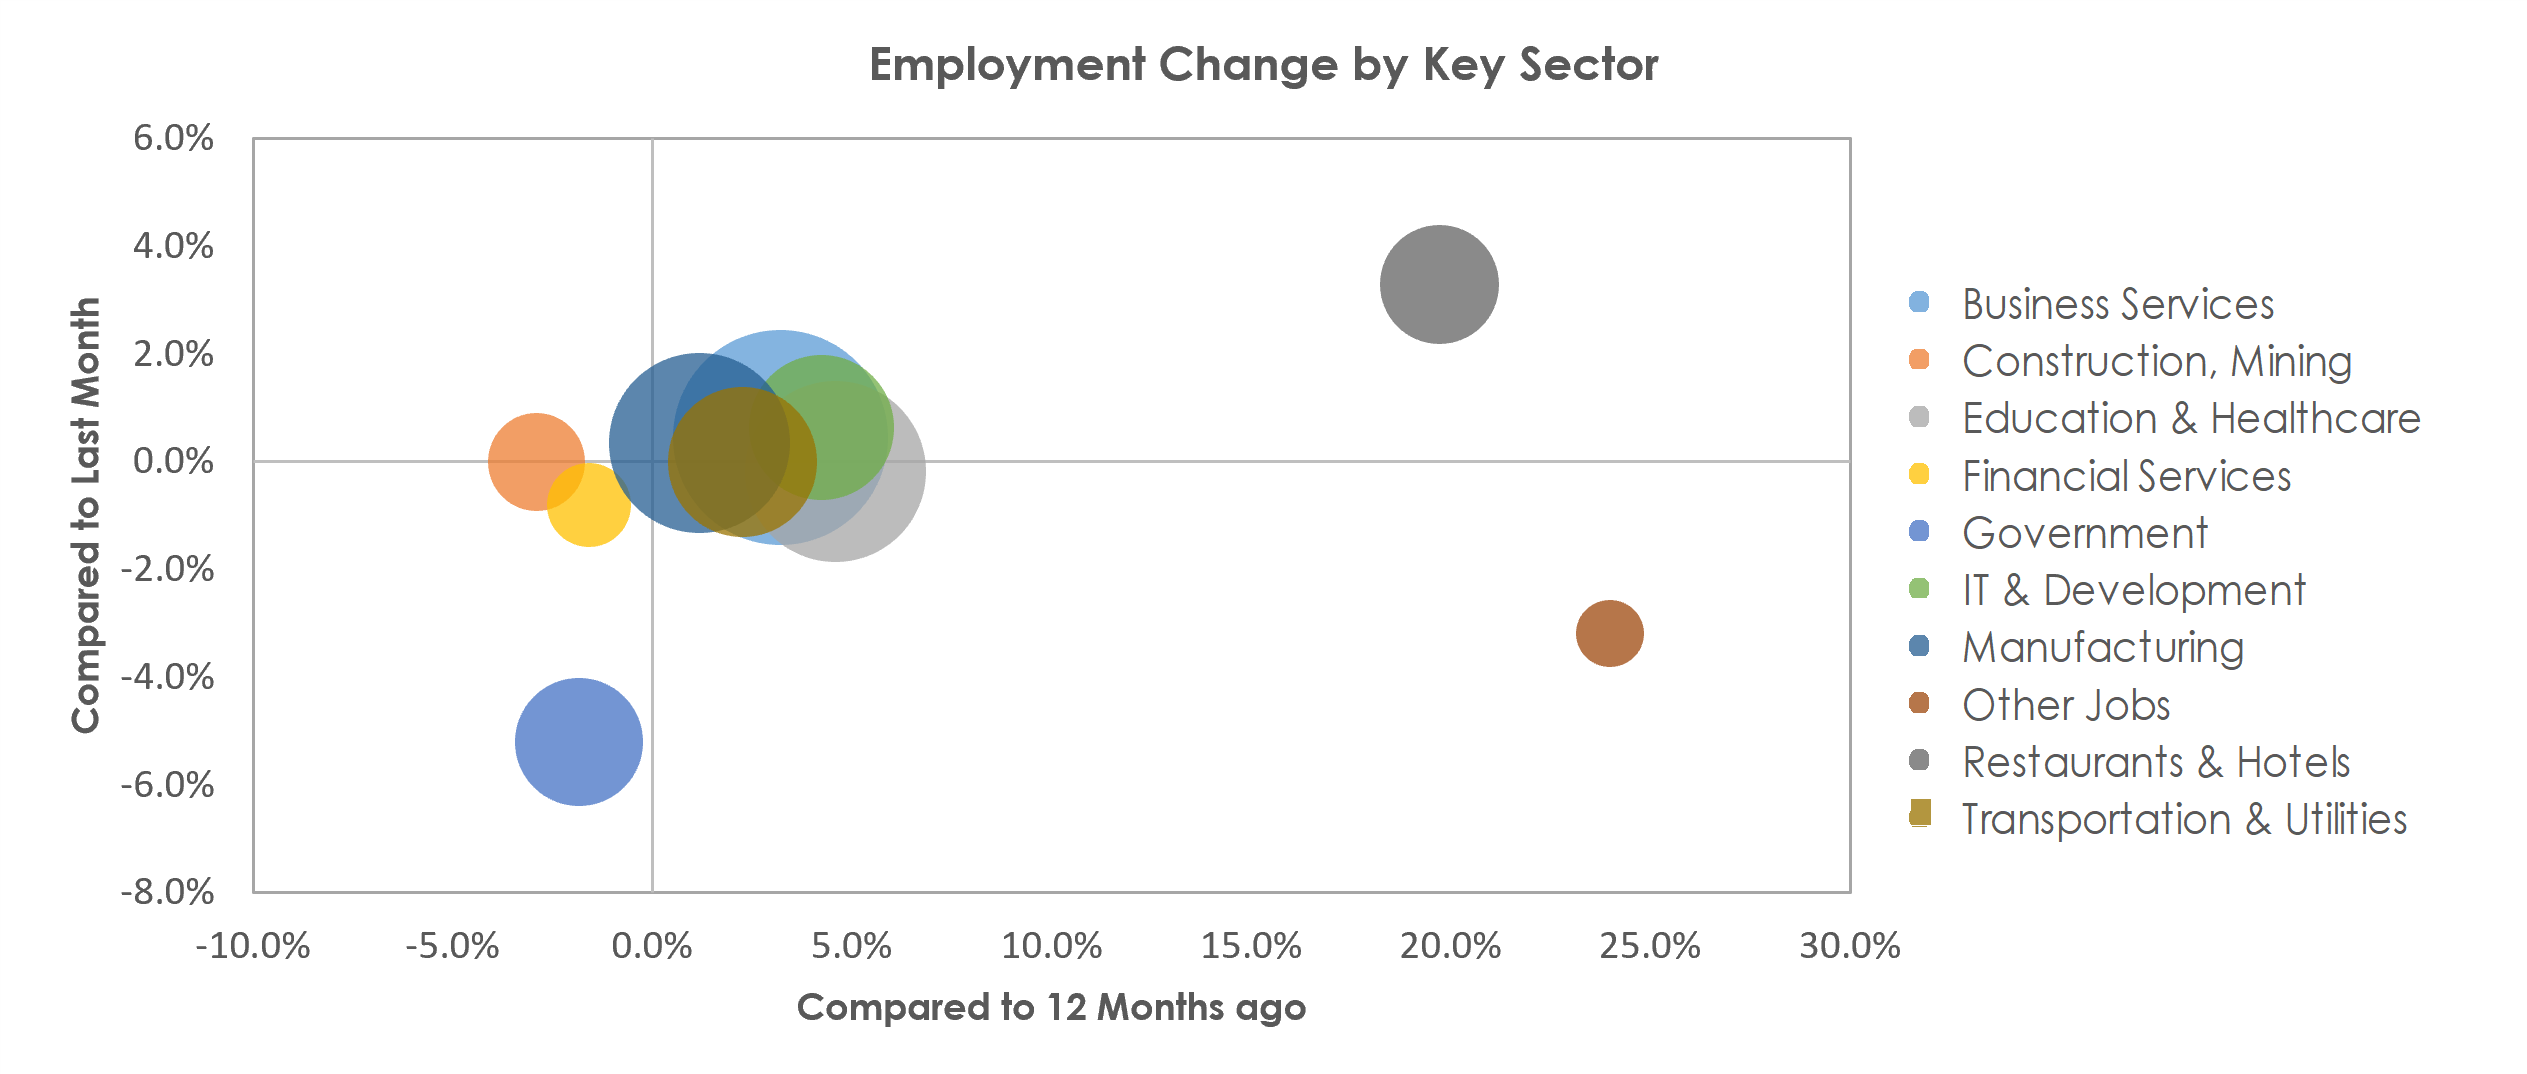 San Jose-Sunnyvale-Santa Clara, CA Unemployment by Industry July 2021